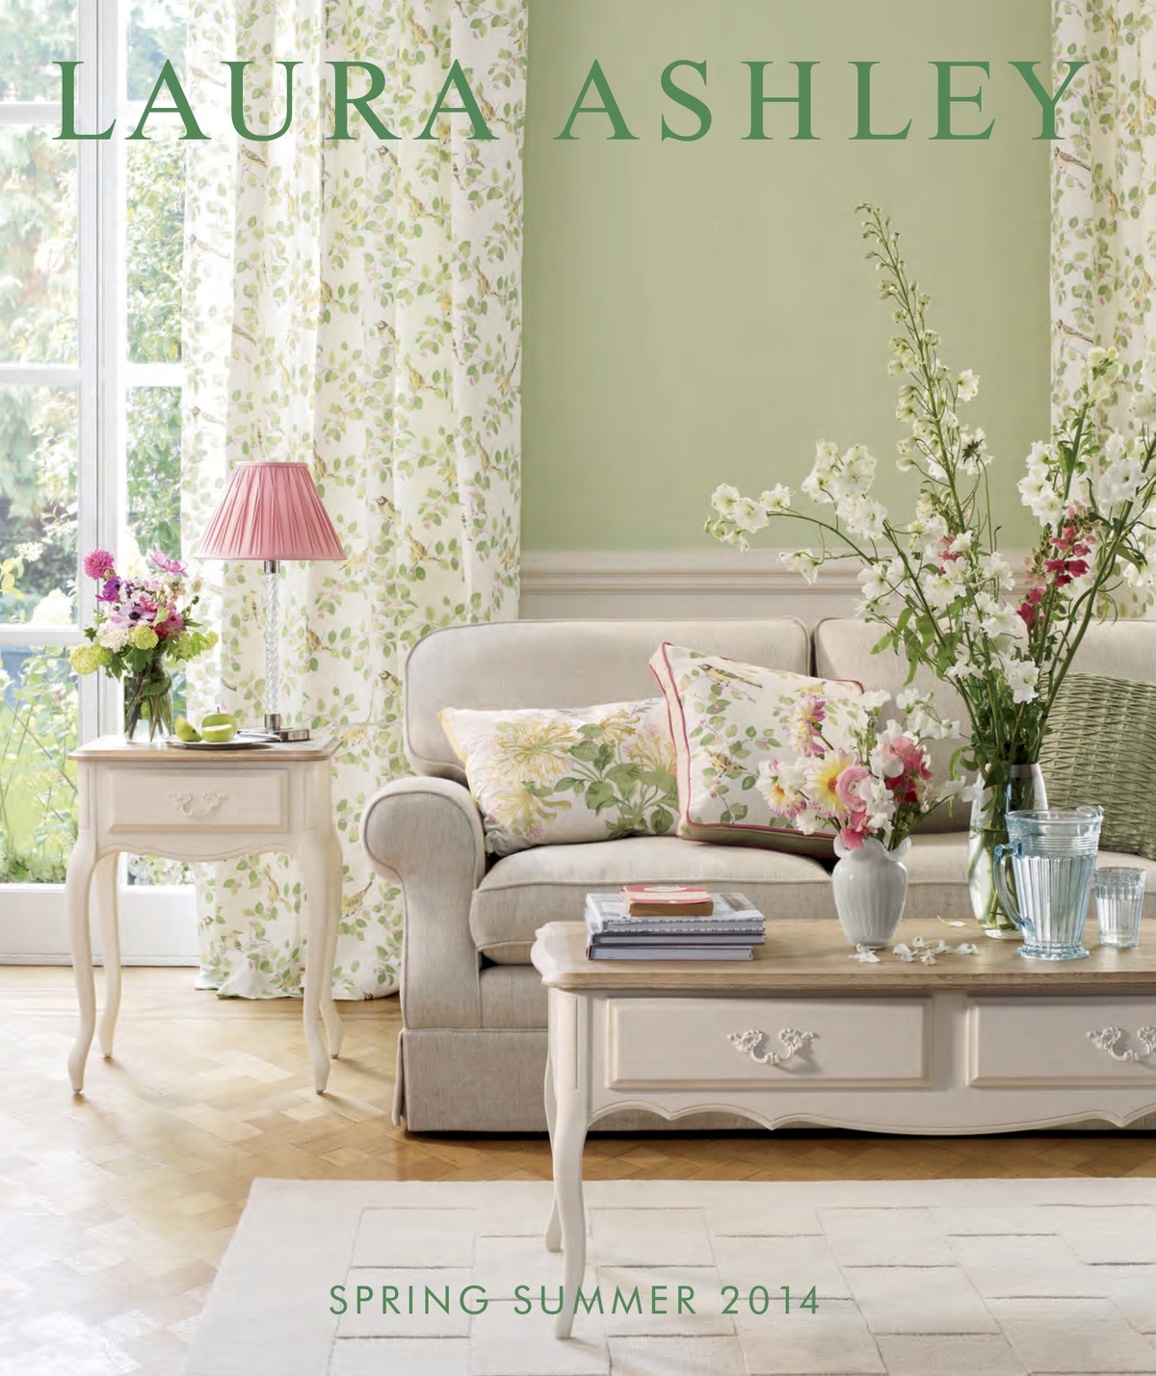 Laura Ashley Spring Summer 2014 Catalogue